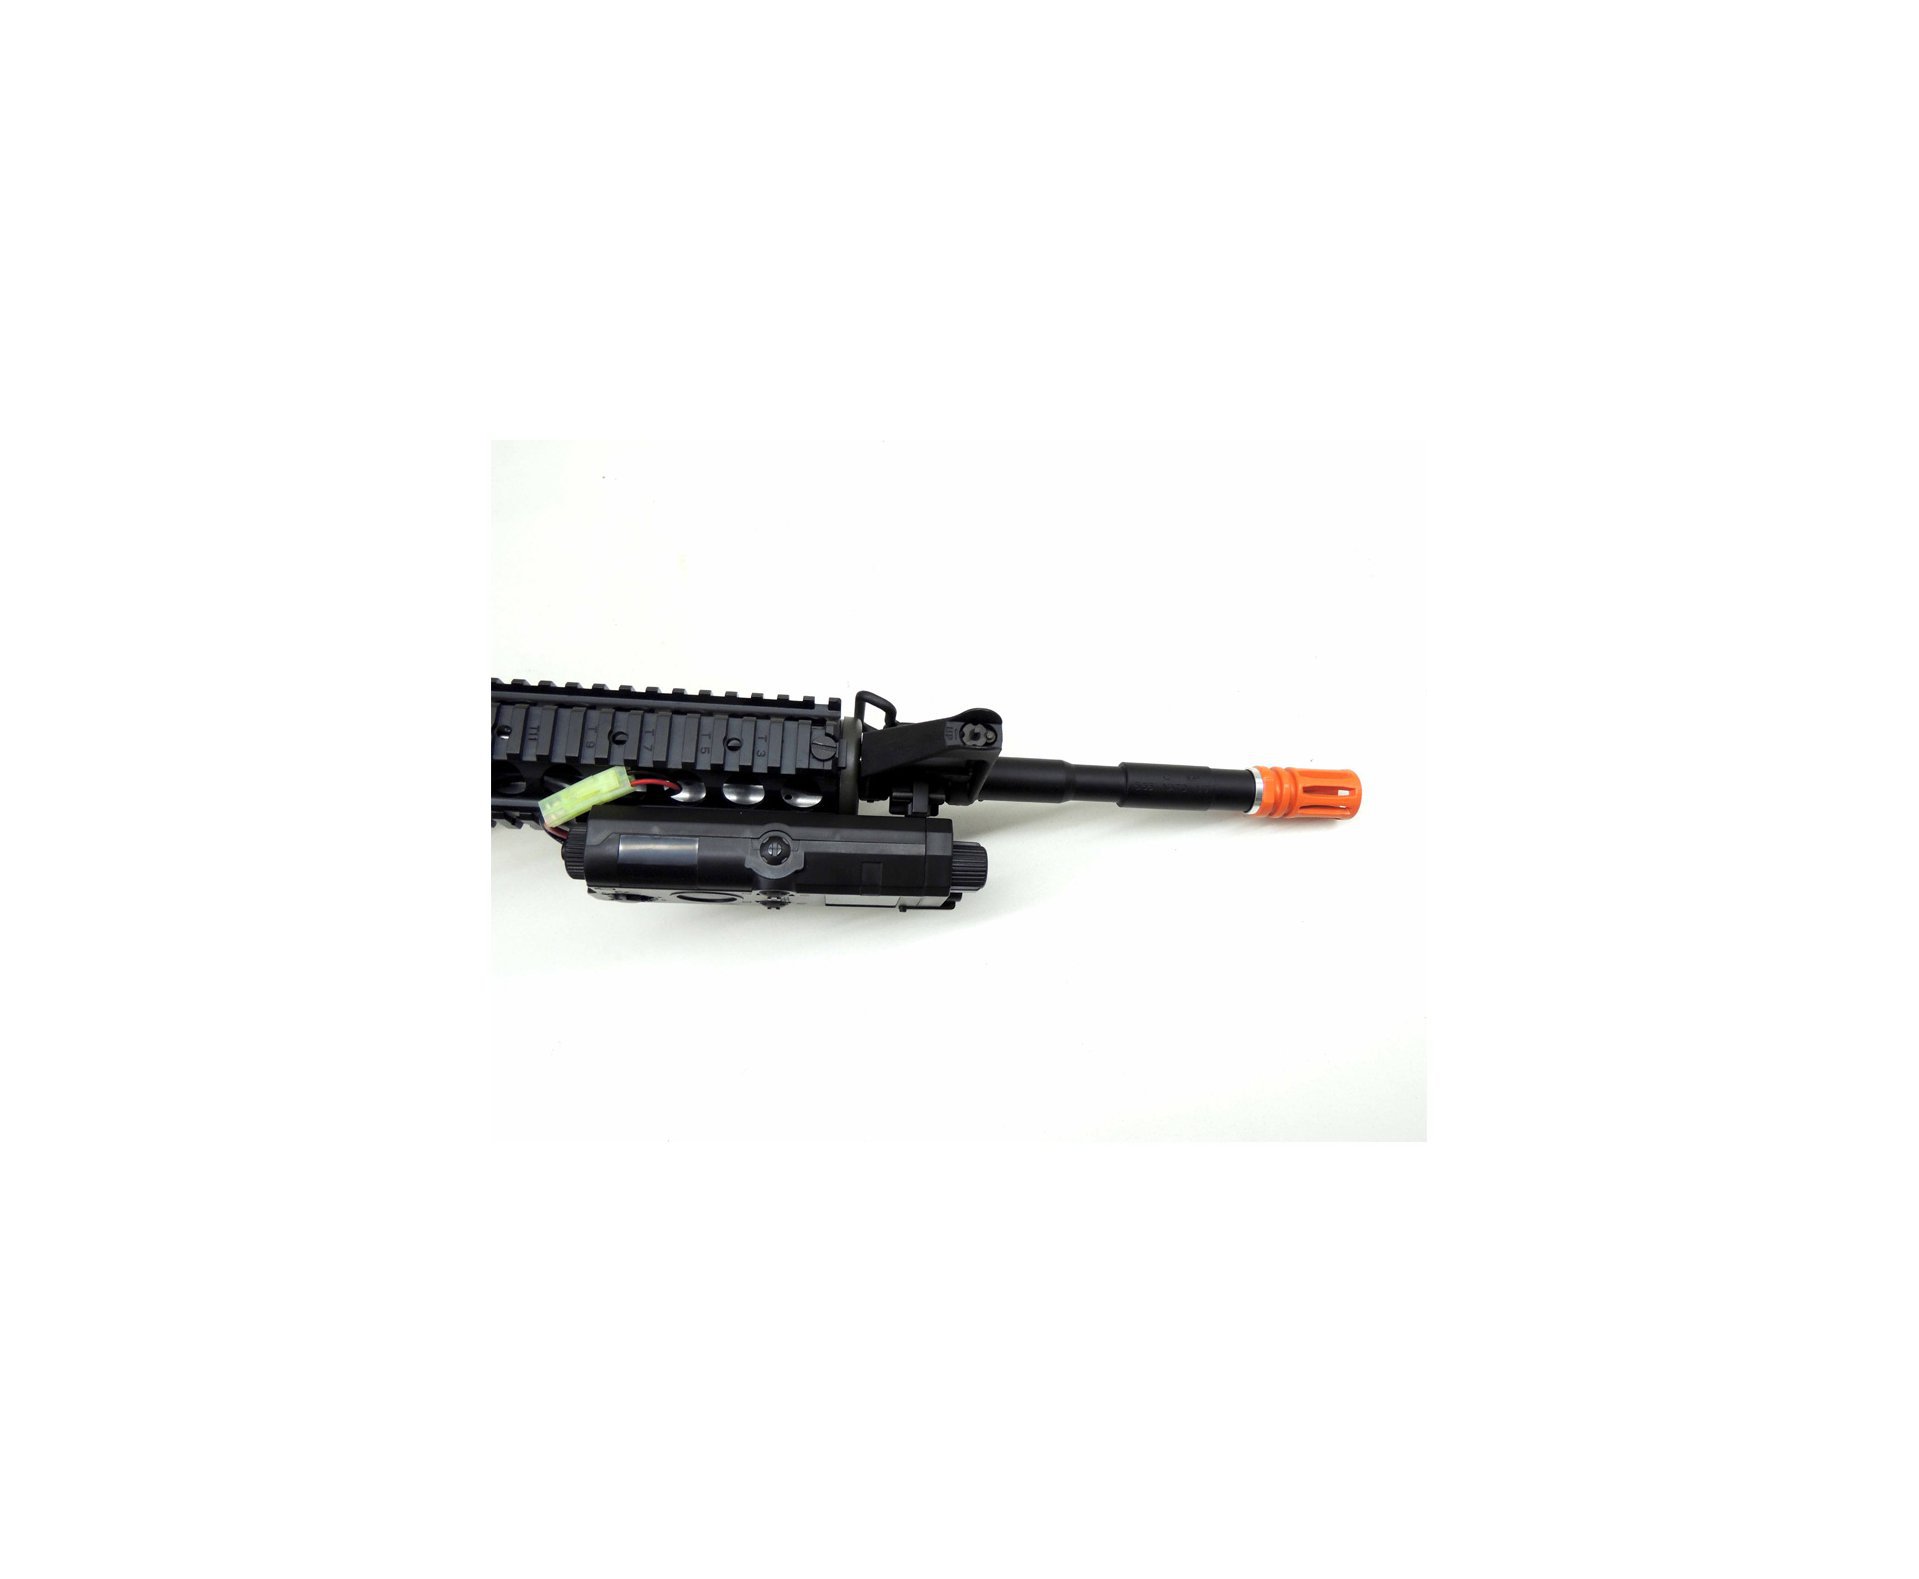 Rifle De Airsoft Colt M4a1ris Cal 6,0 Mm - King Arms + Farda Marpat Digital Selva Swiss+arms - Tamanho Xg